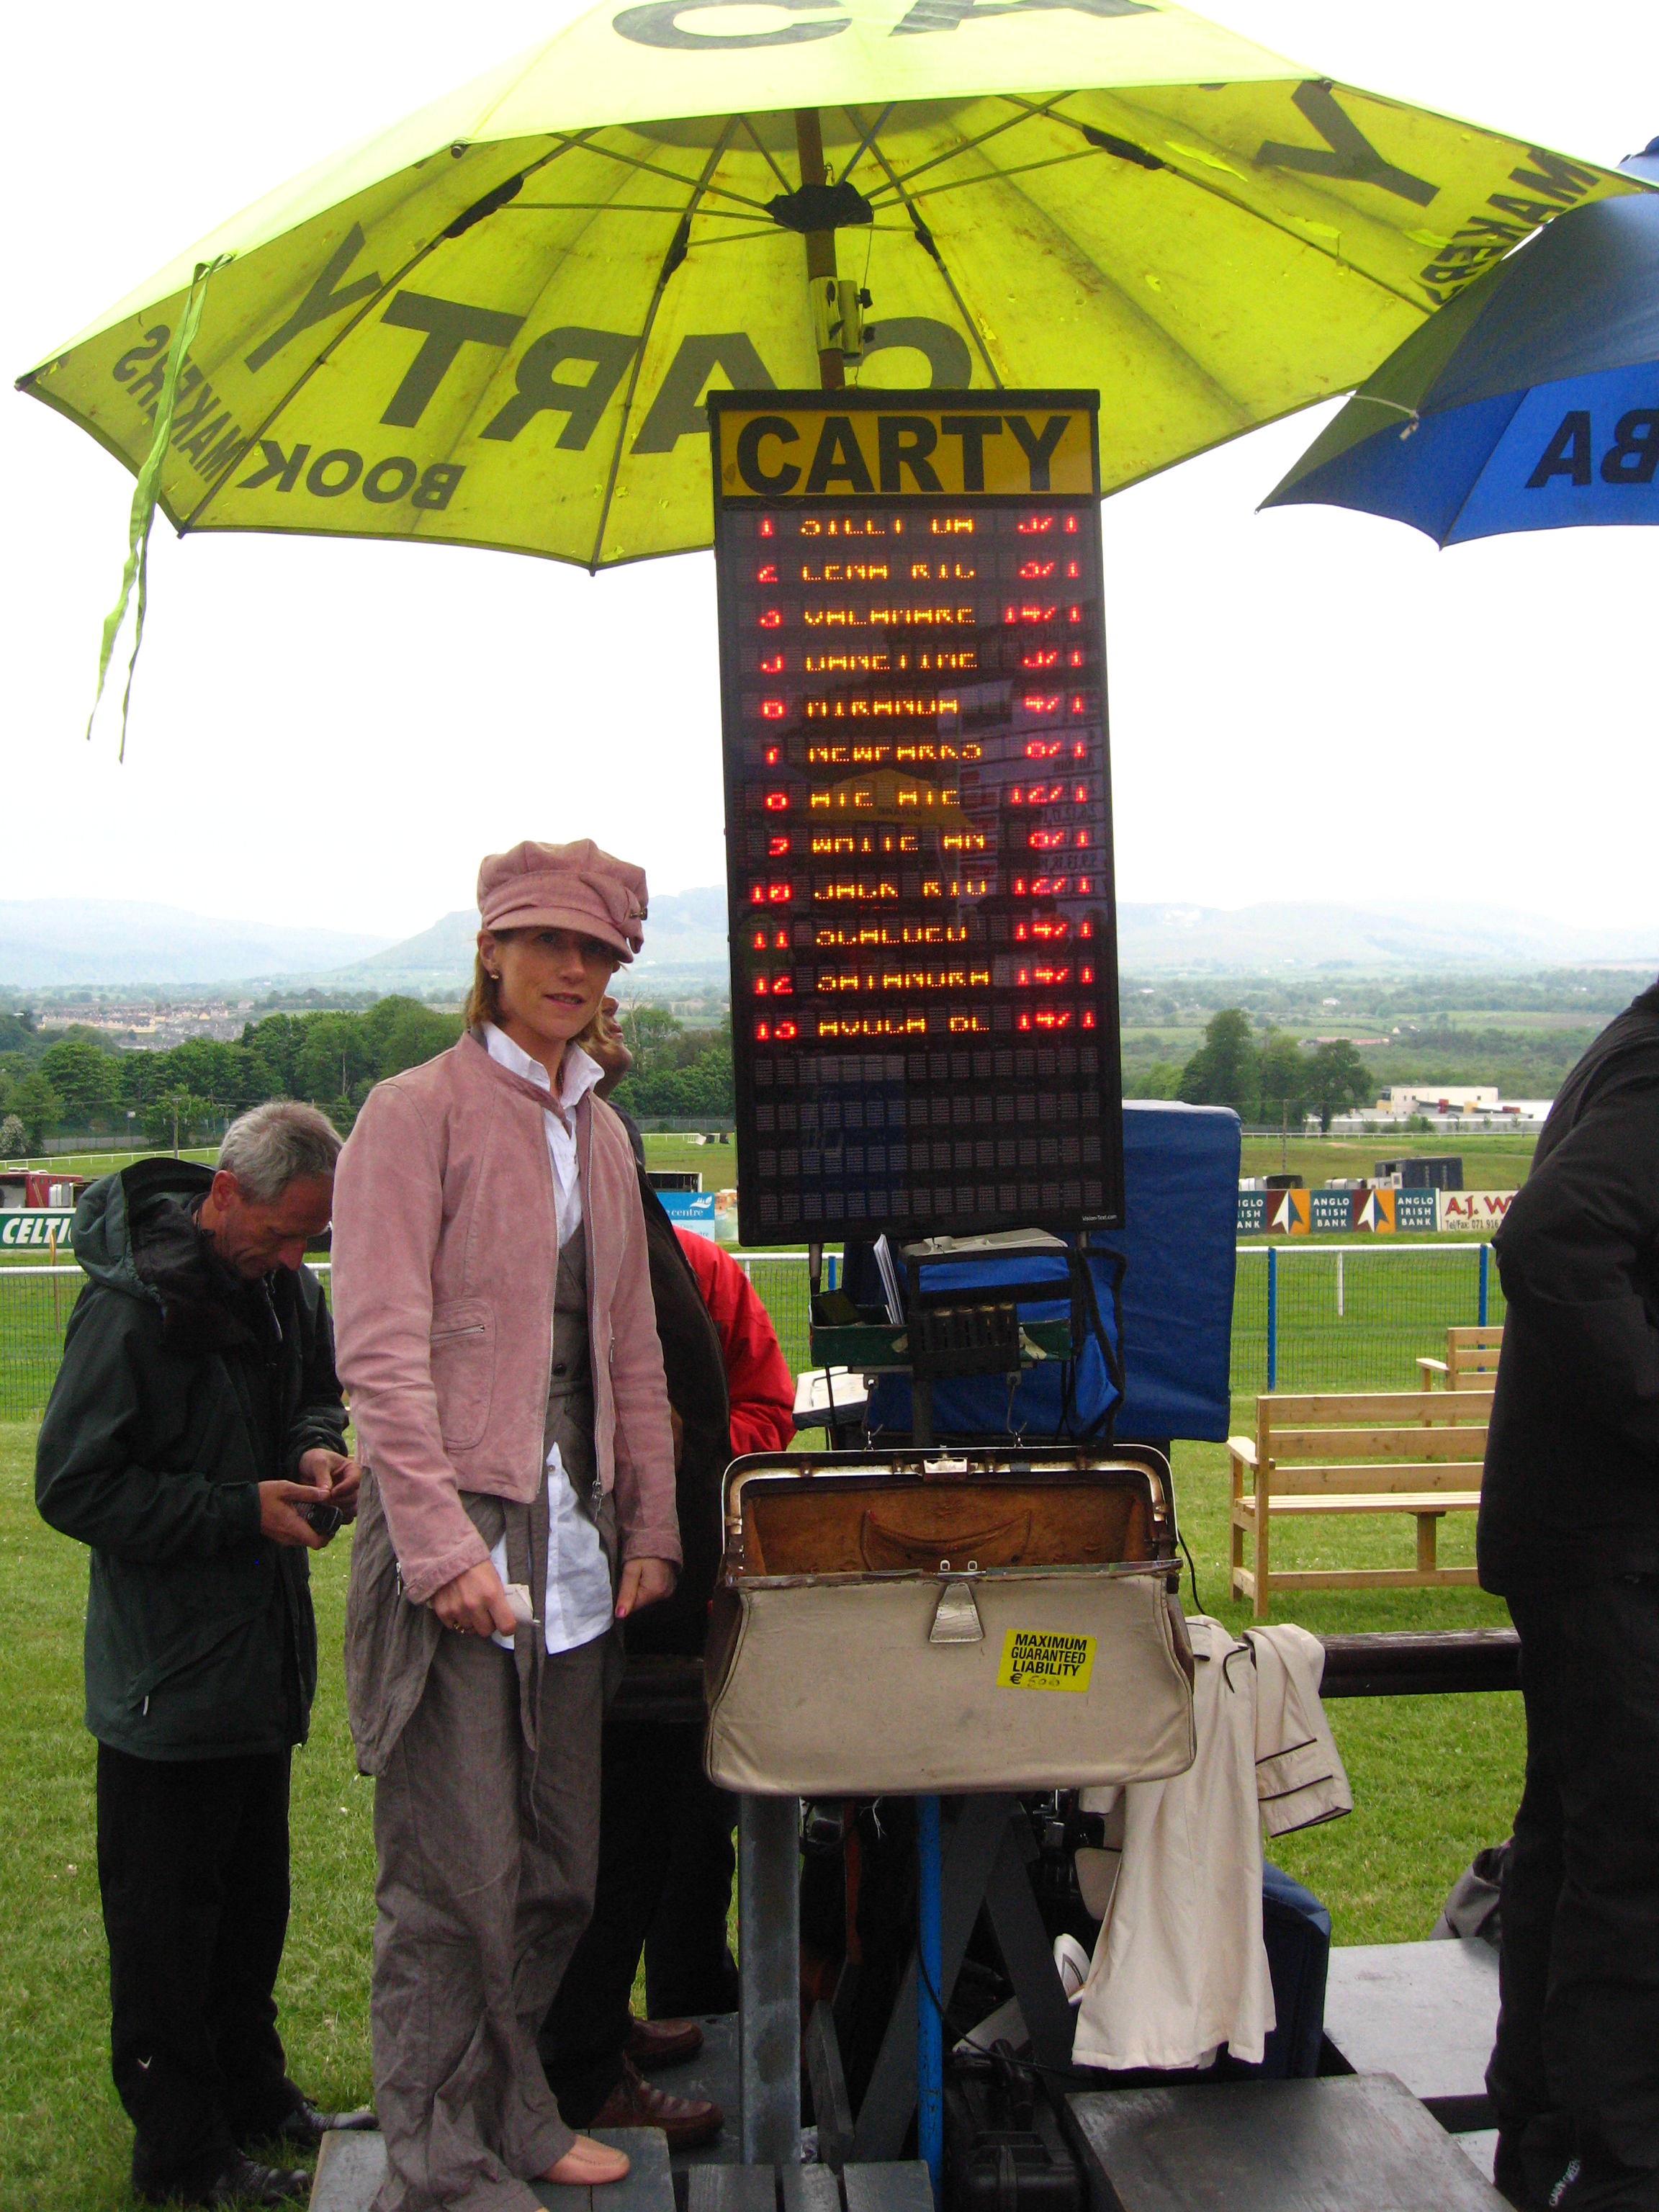 File:Lady bookie at Sligo races, Ireland (2547041154).jpg - Wikimedia Commons